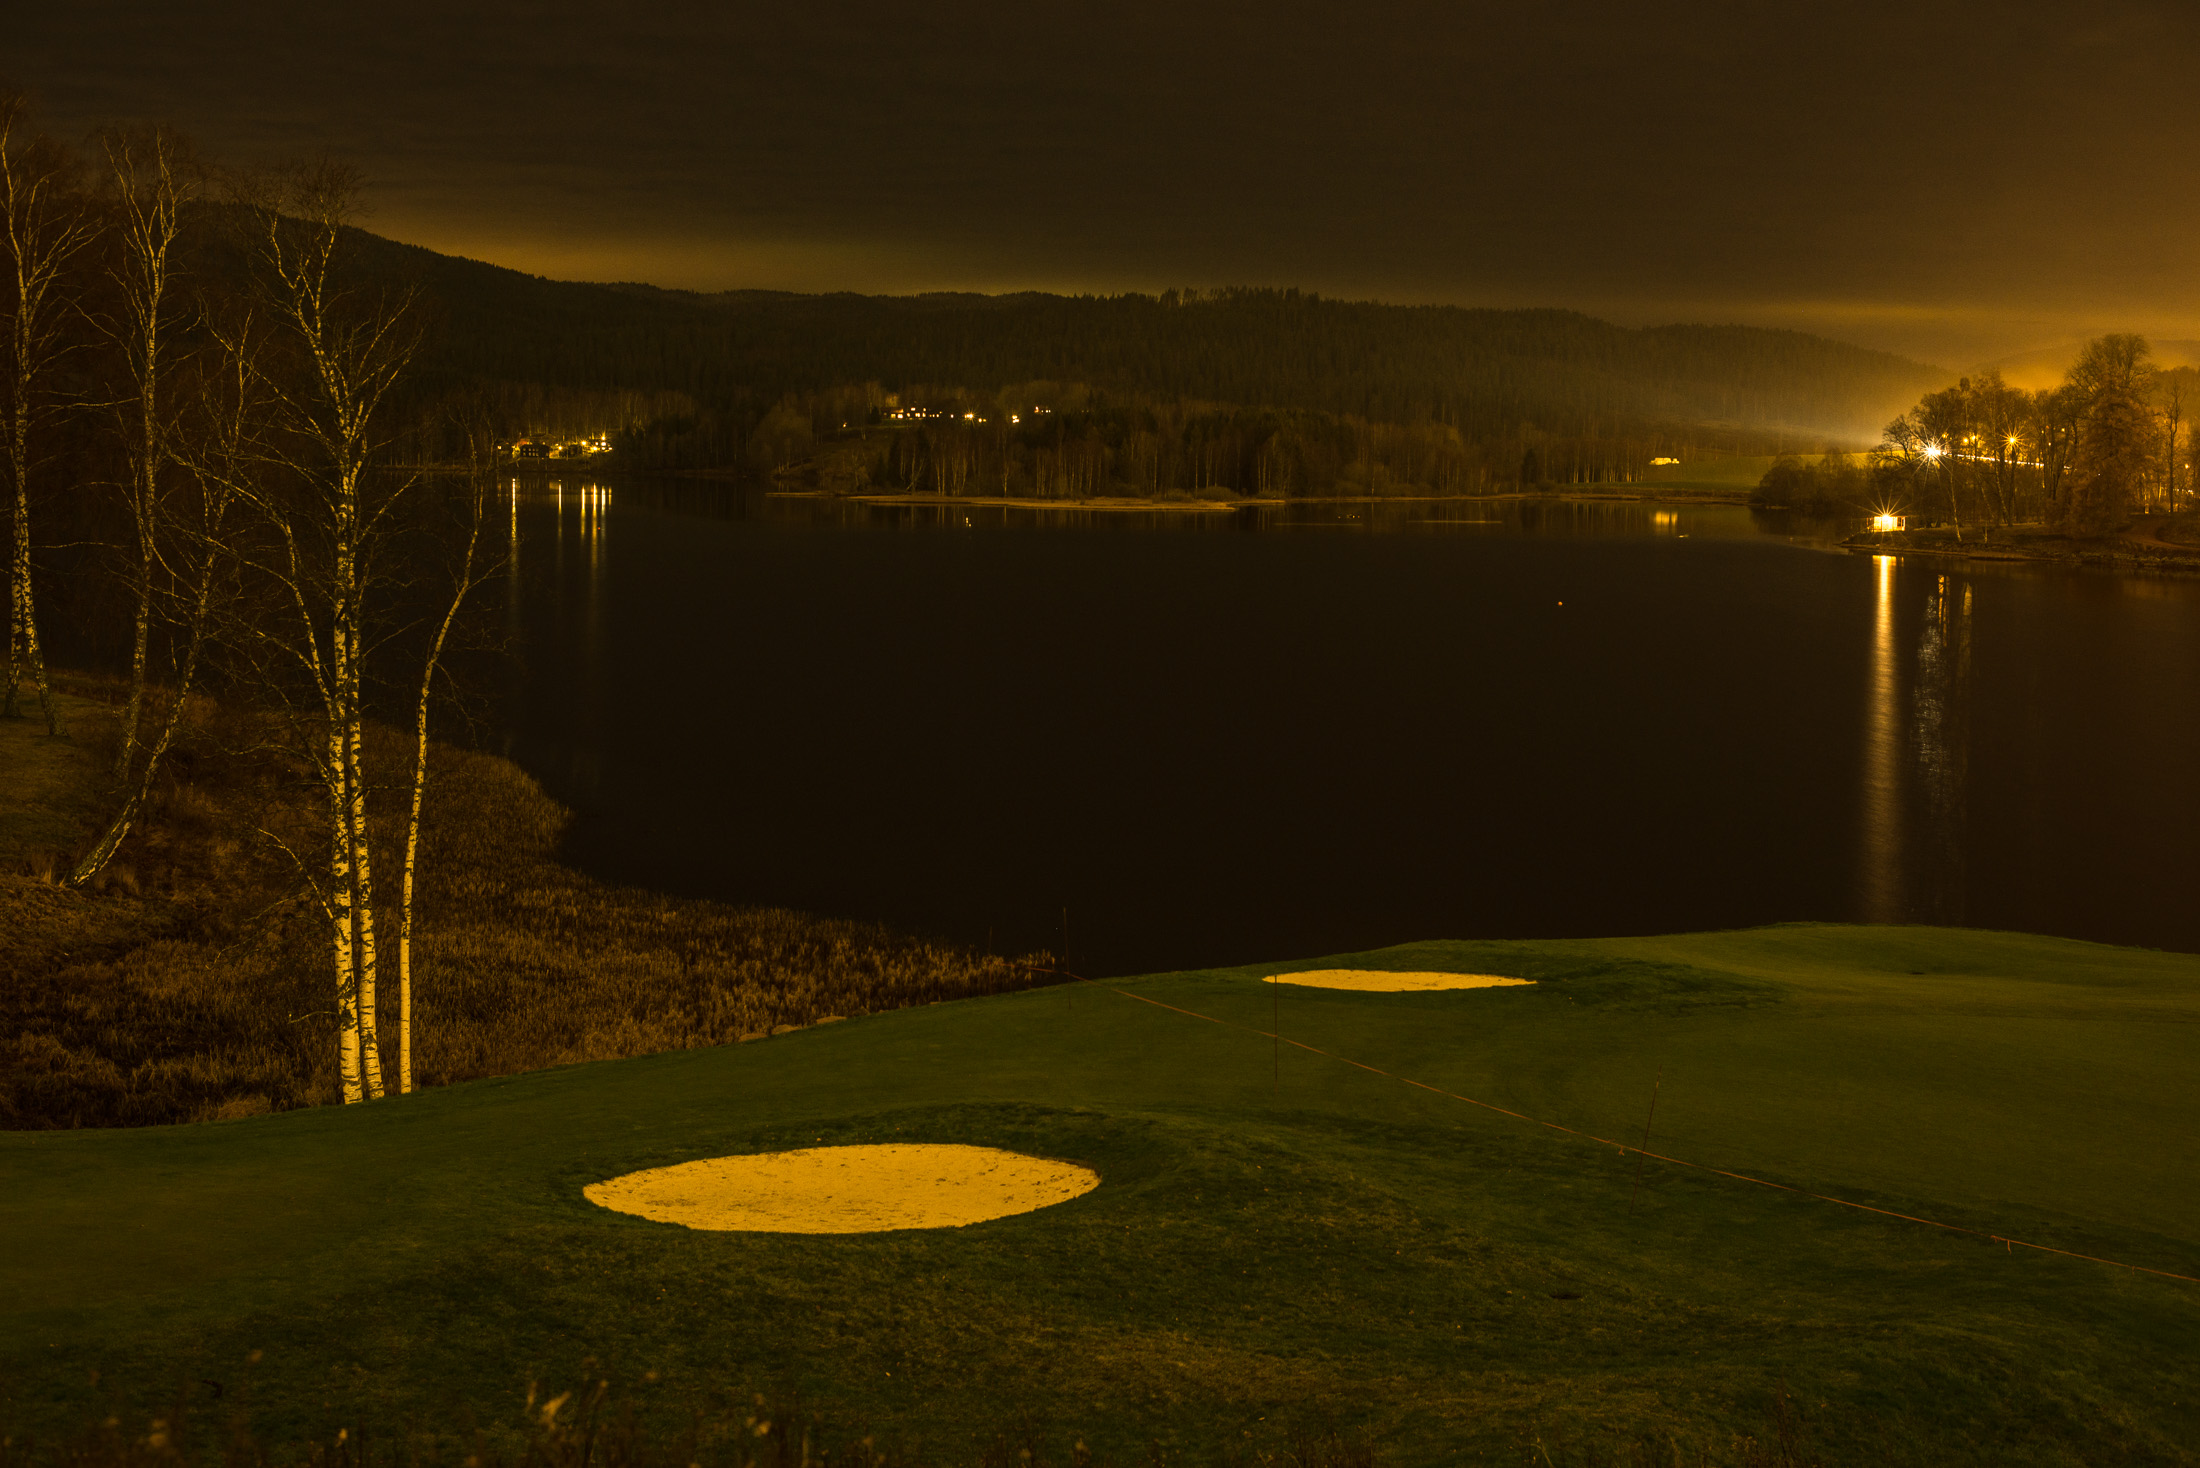 Oslo Golf Klubb at night-0649